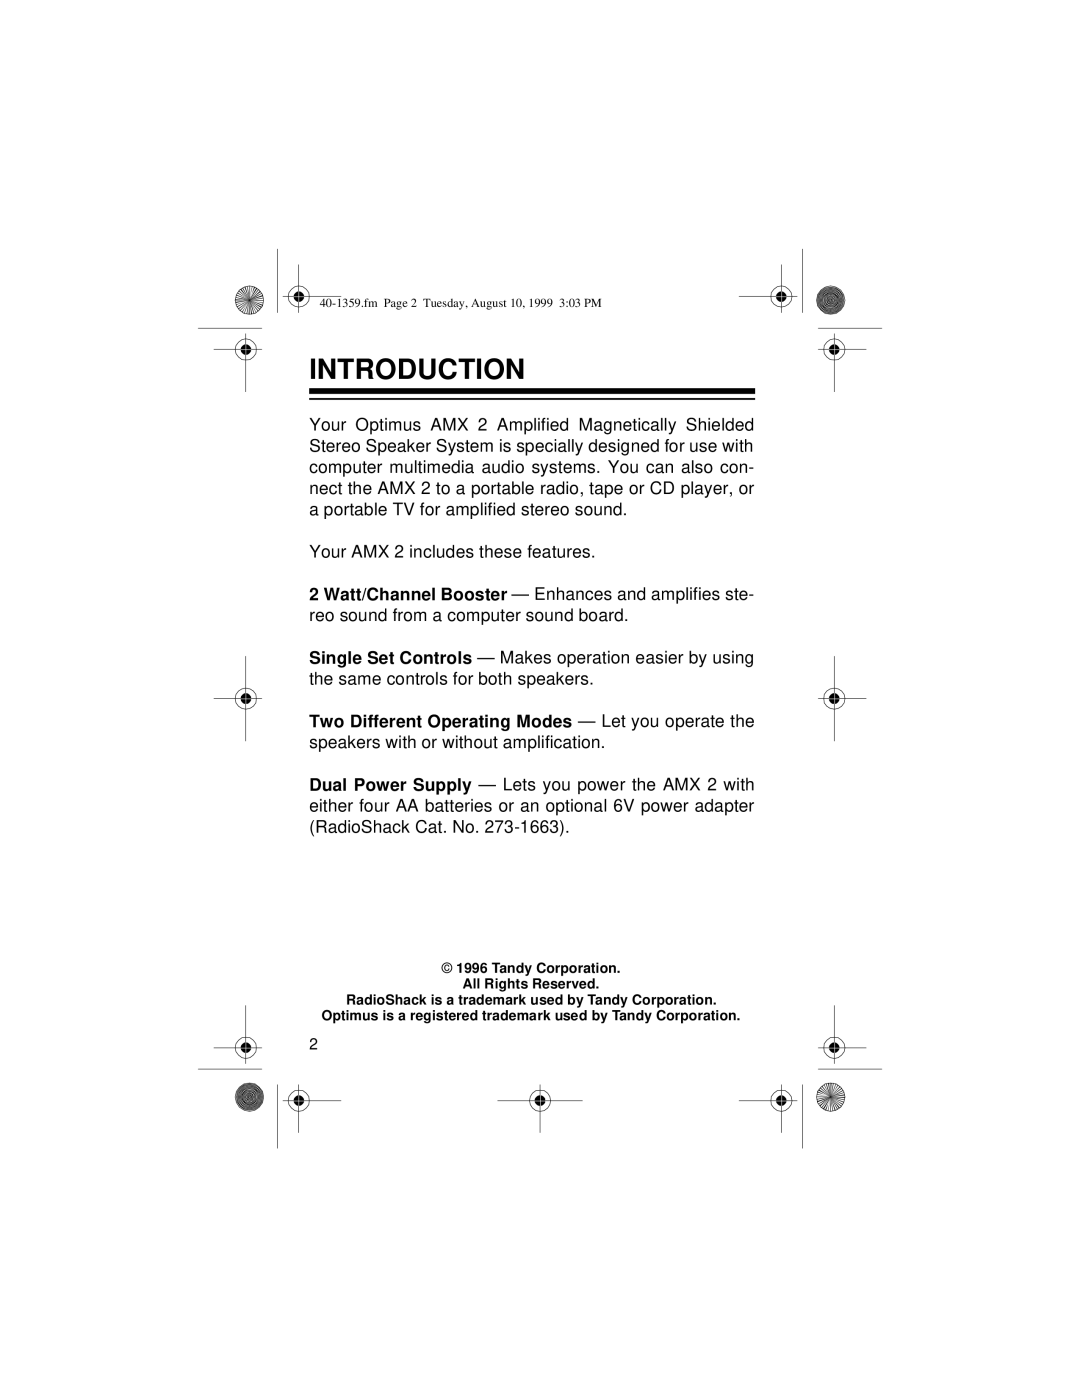 Panasonic AMX 2 owner manual Introduction 